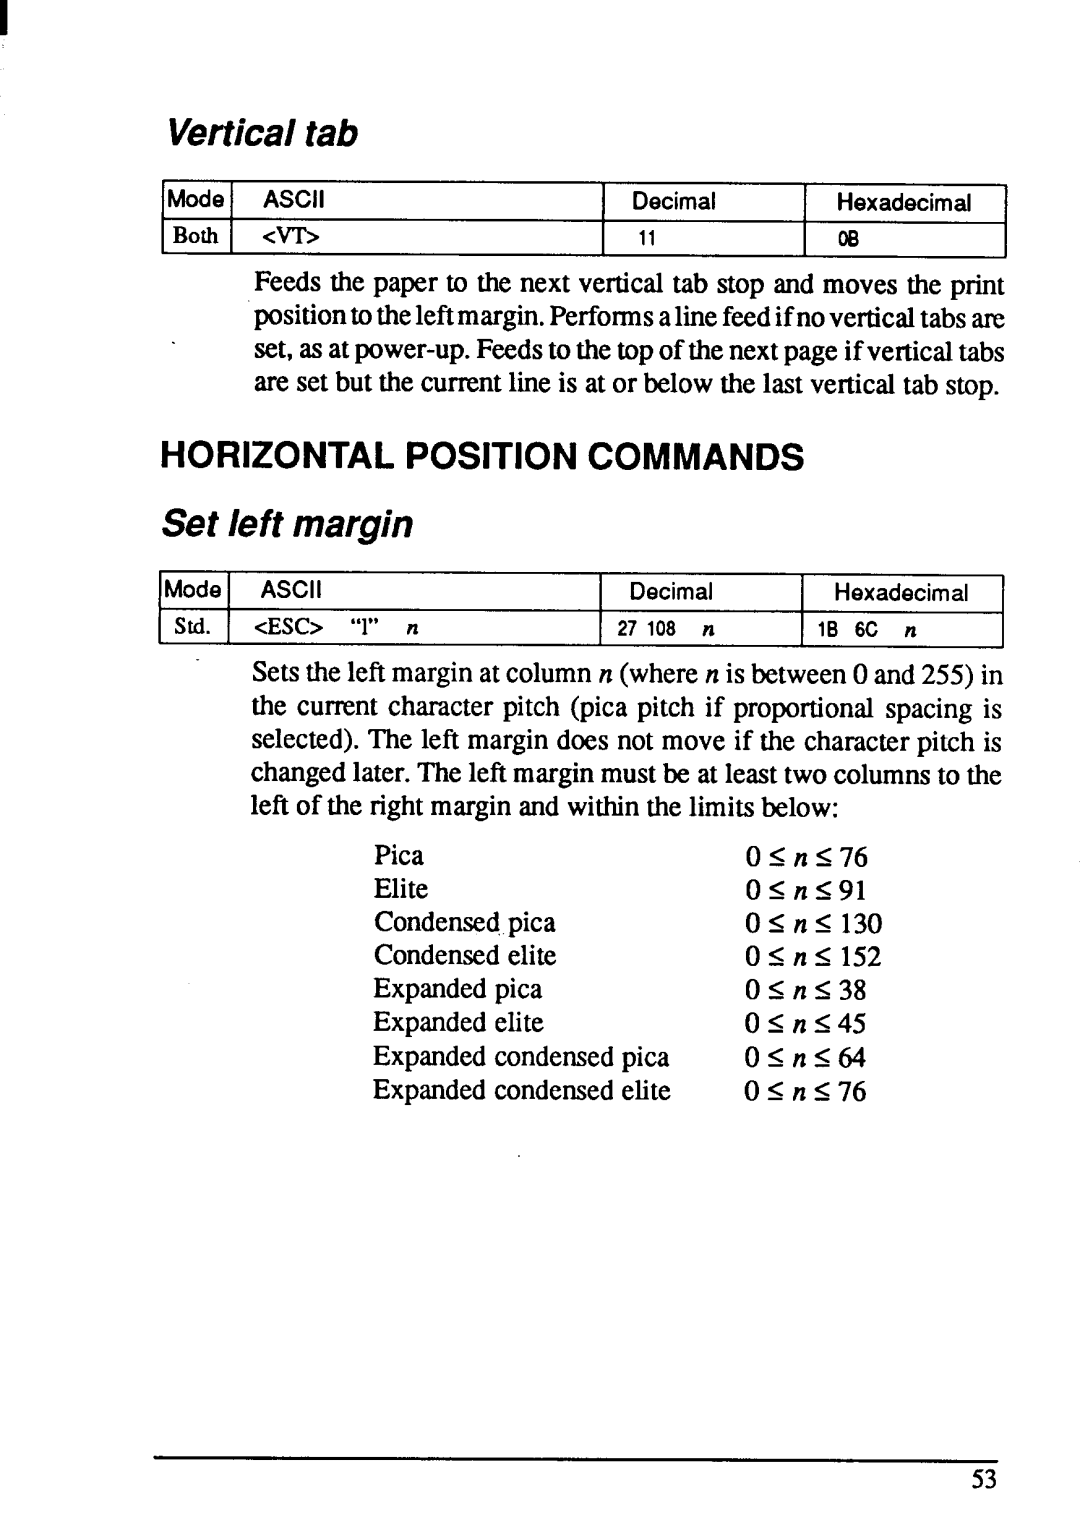 Star Micronics NX-1001 manual Horizontal Position Commands, IB 6C n 